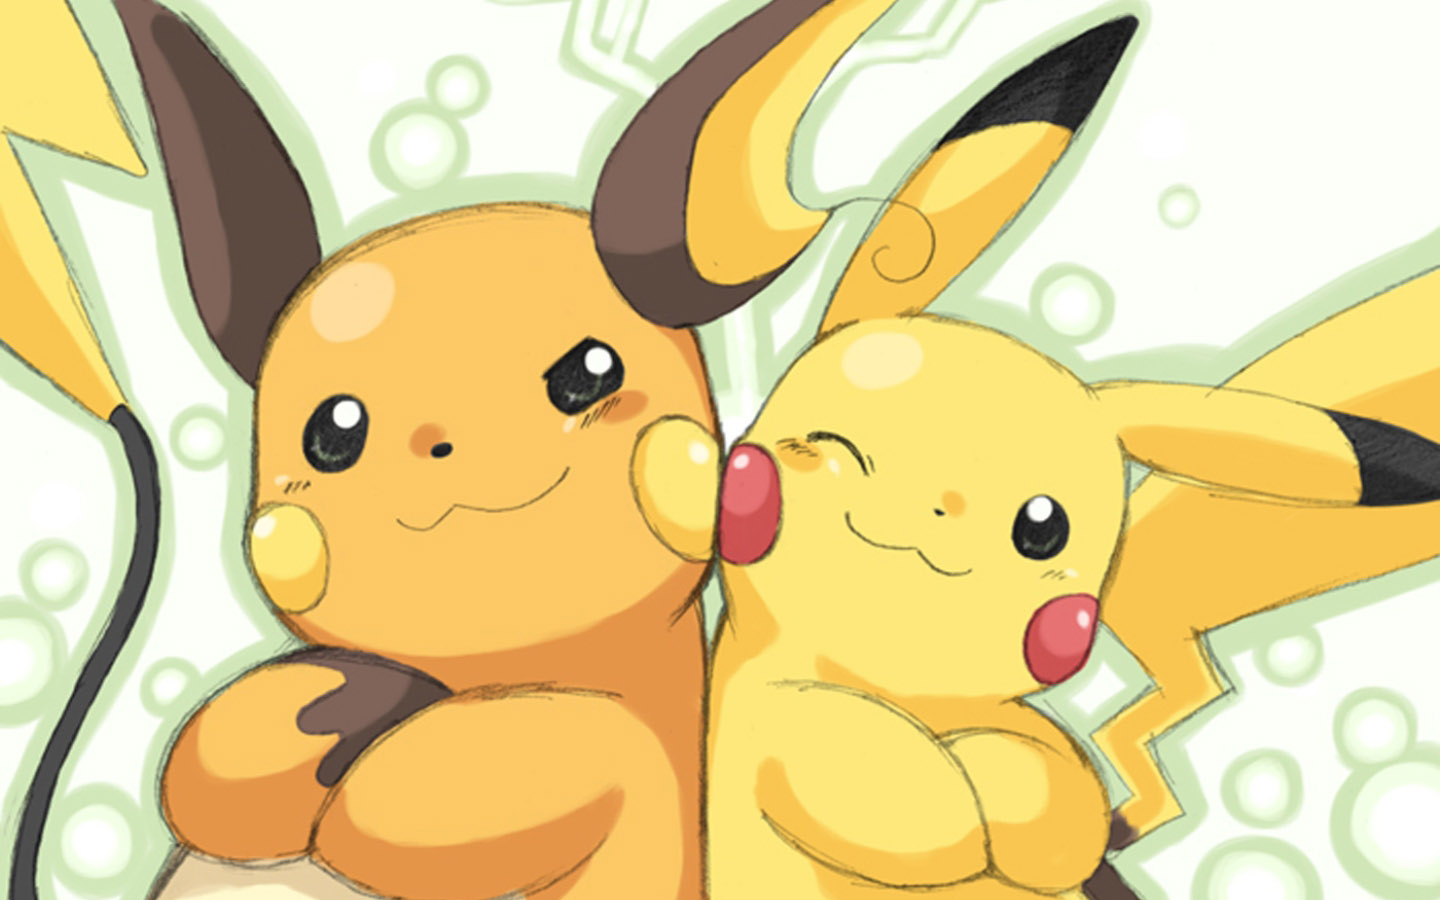 Two cute Pikachu desktop pictures